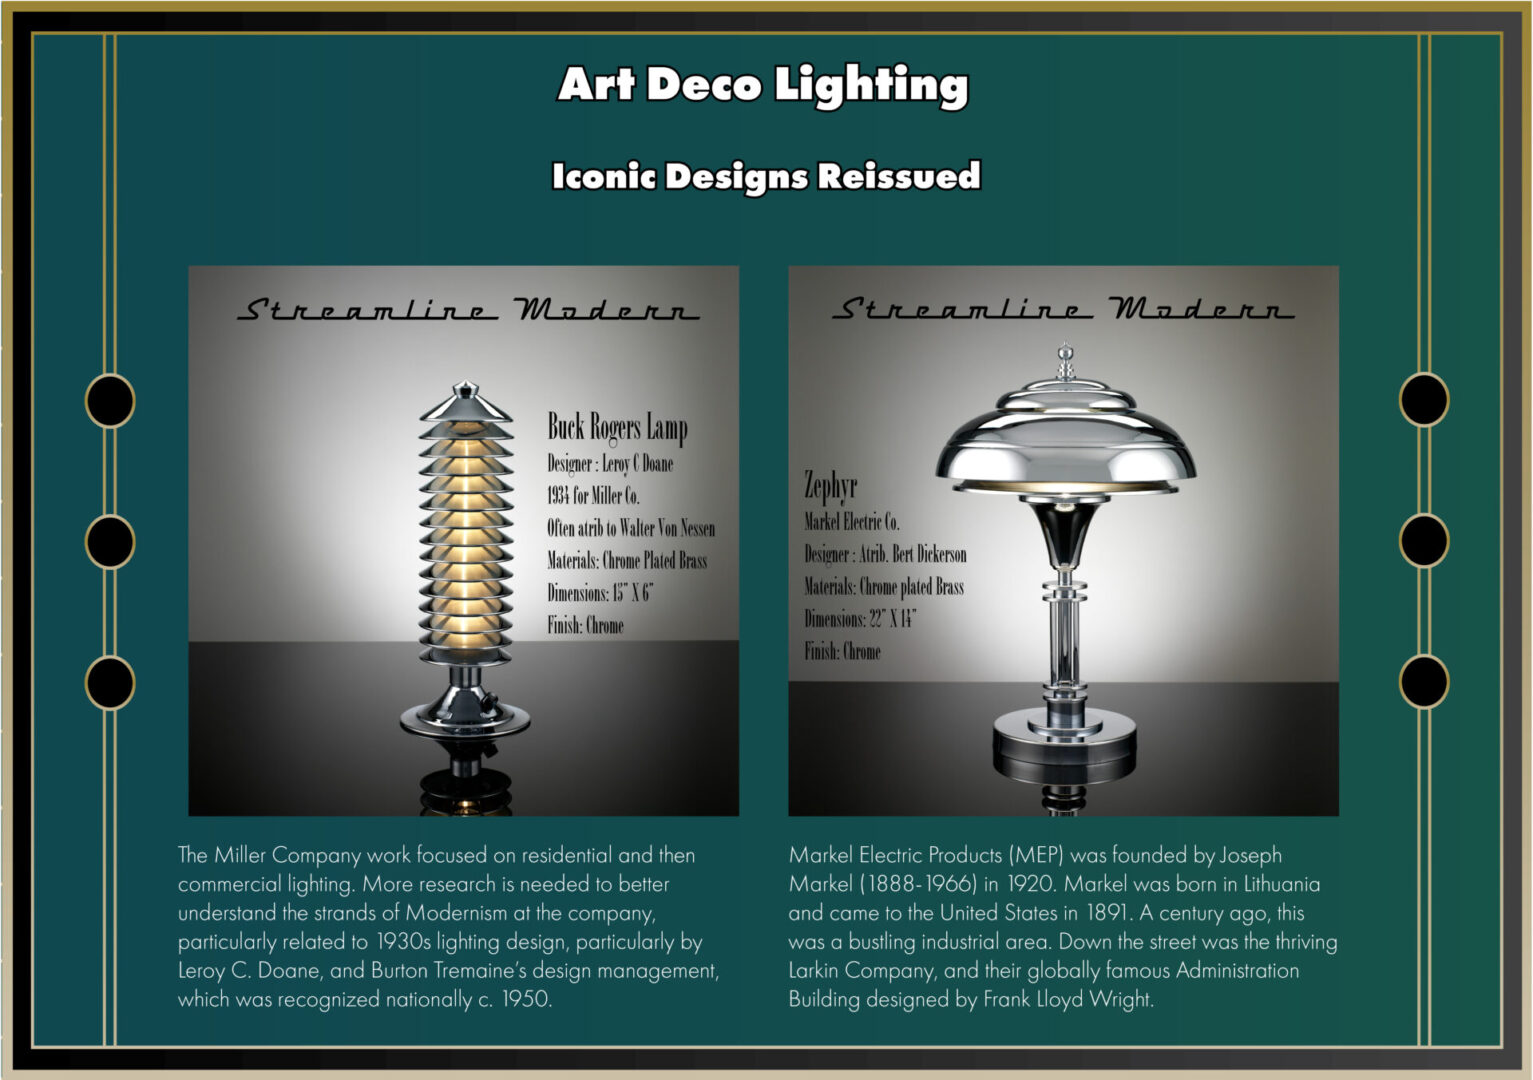 Iconic Designs Reissued for Art Deco Lighting